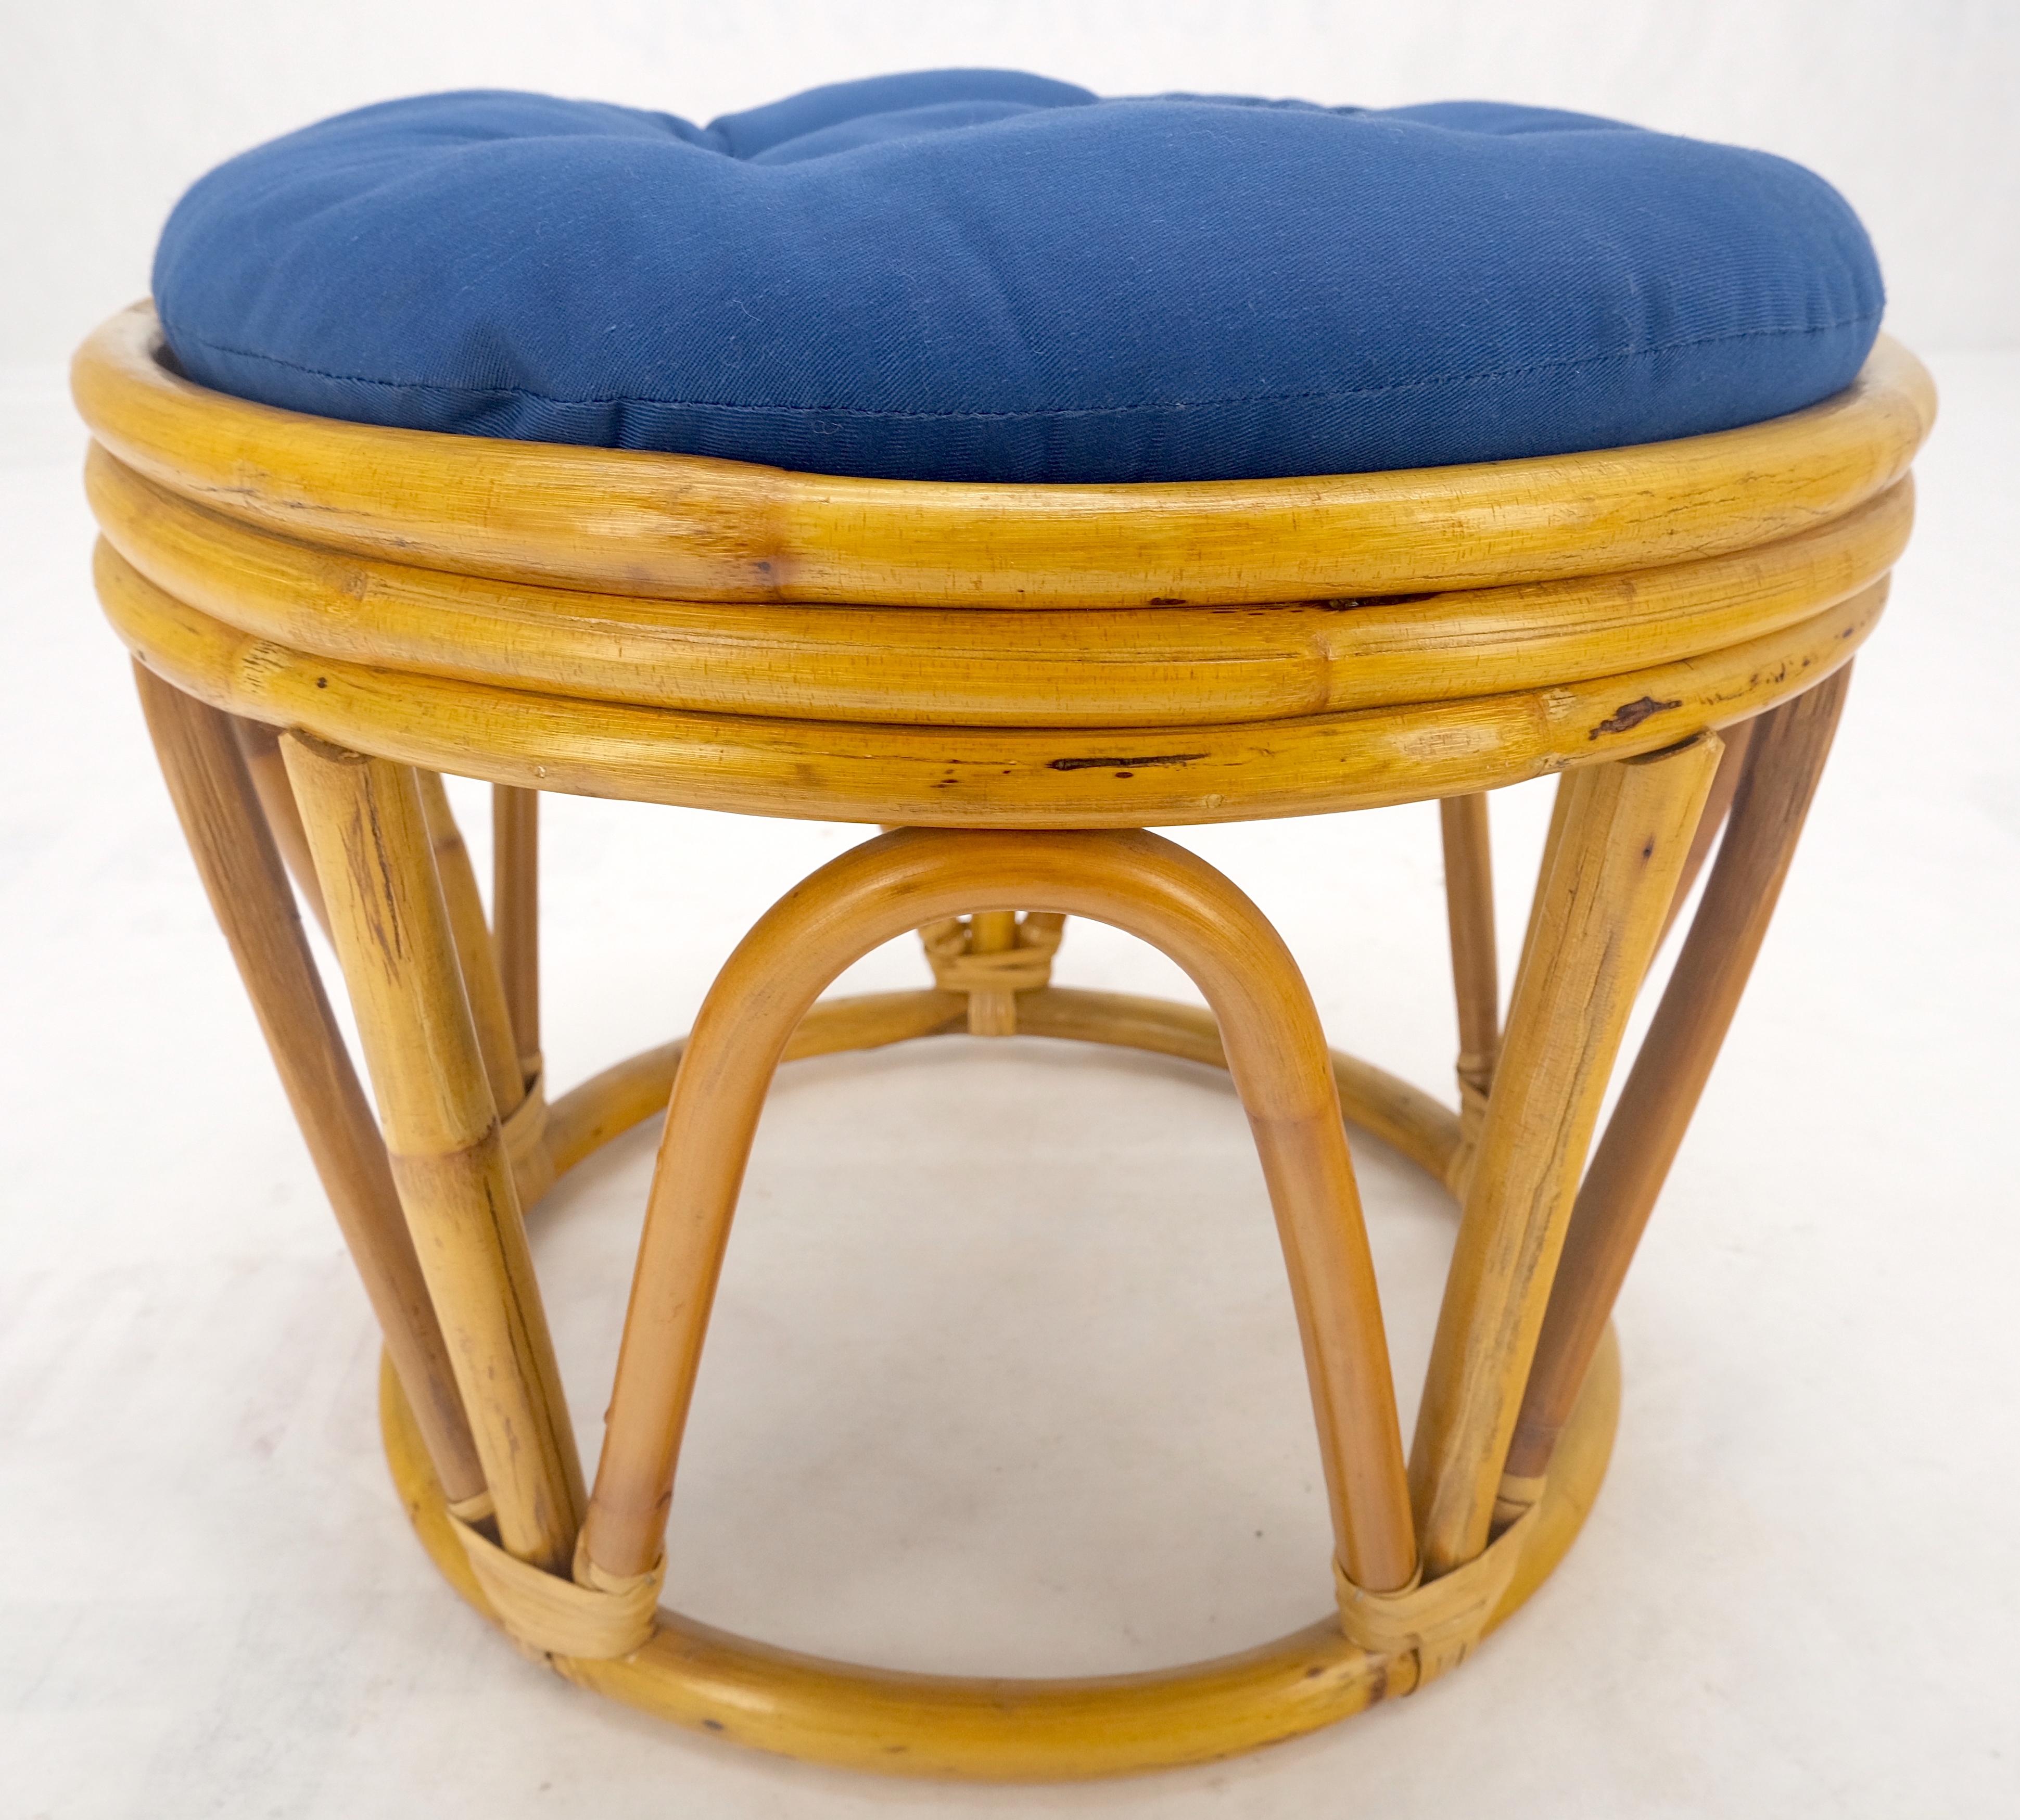 Round Mid Century Modern  Blue Upholstery Ottoman Foot Stool Bench Pouf MINT!
